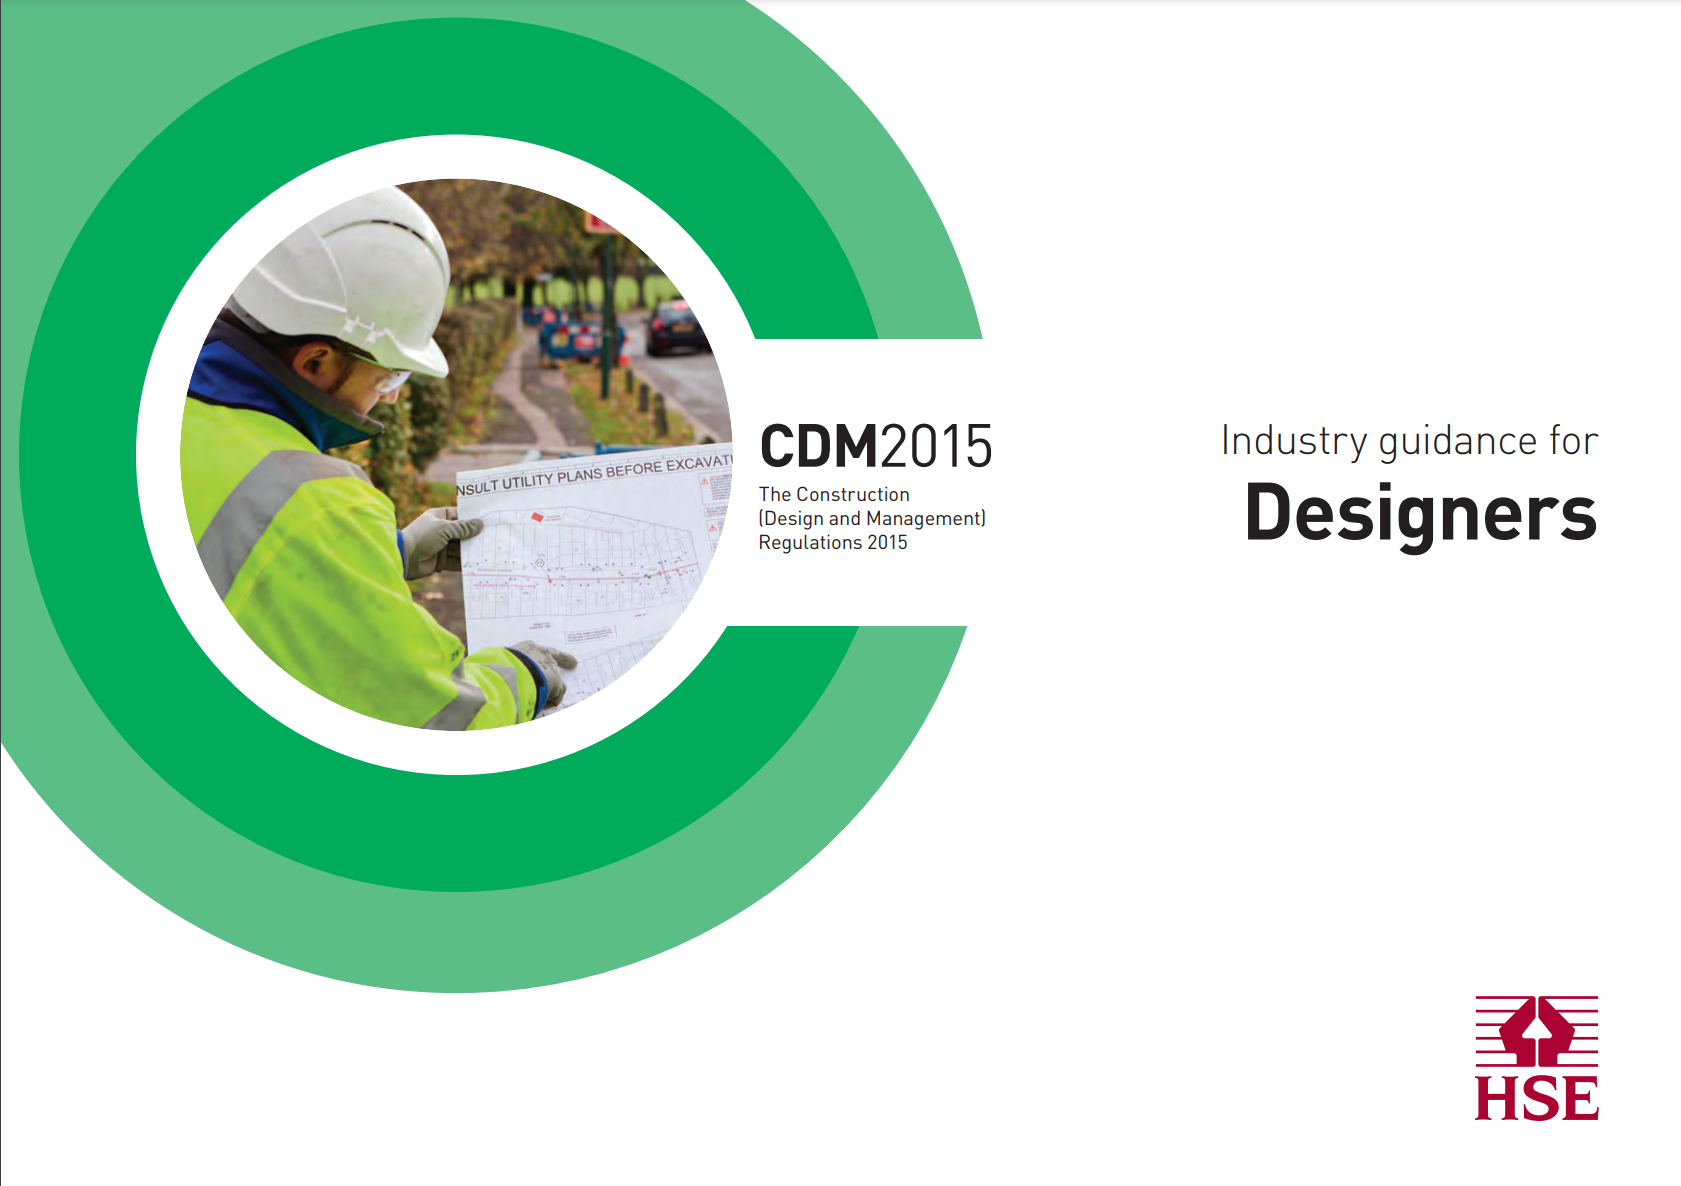 CDM2015-Industry guidance for Designers